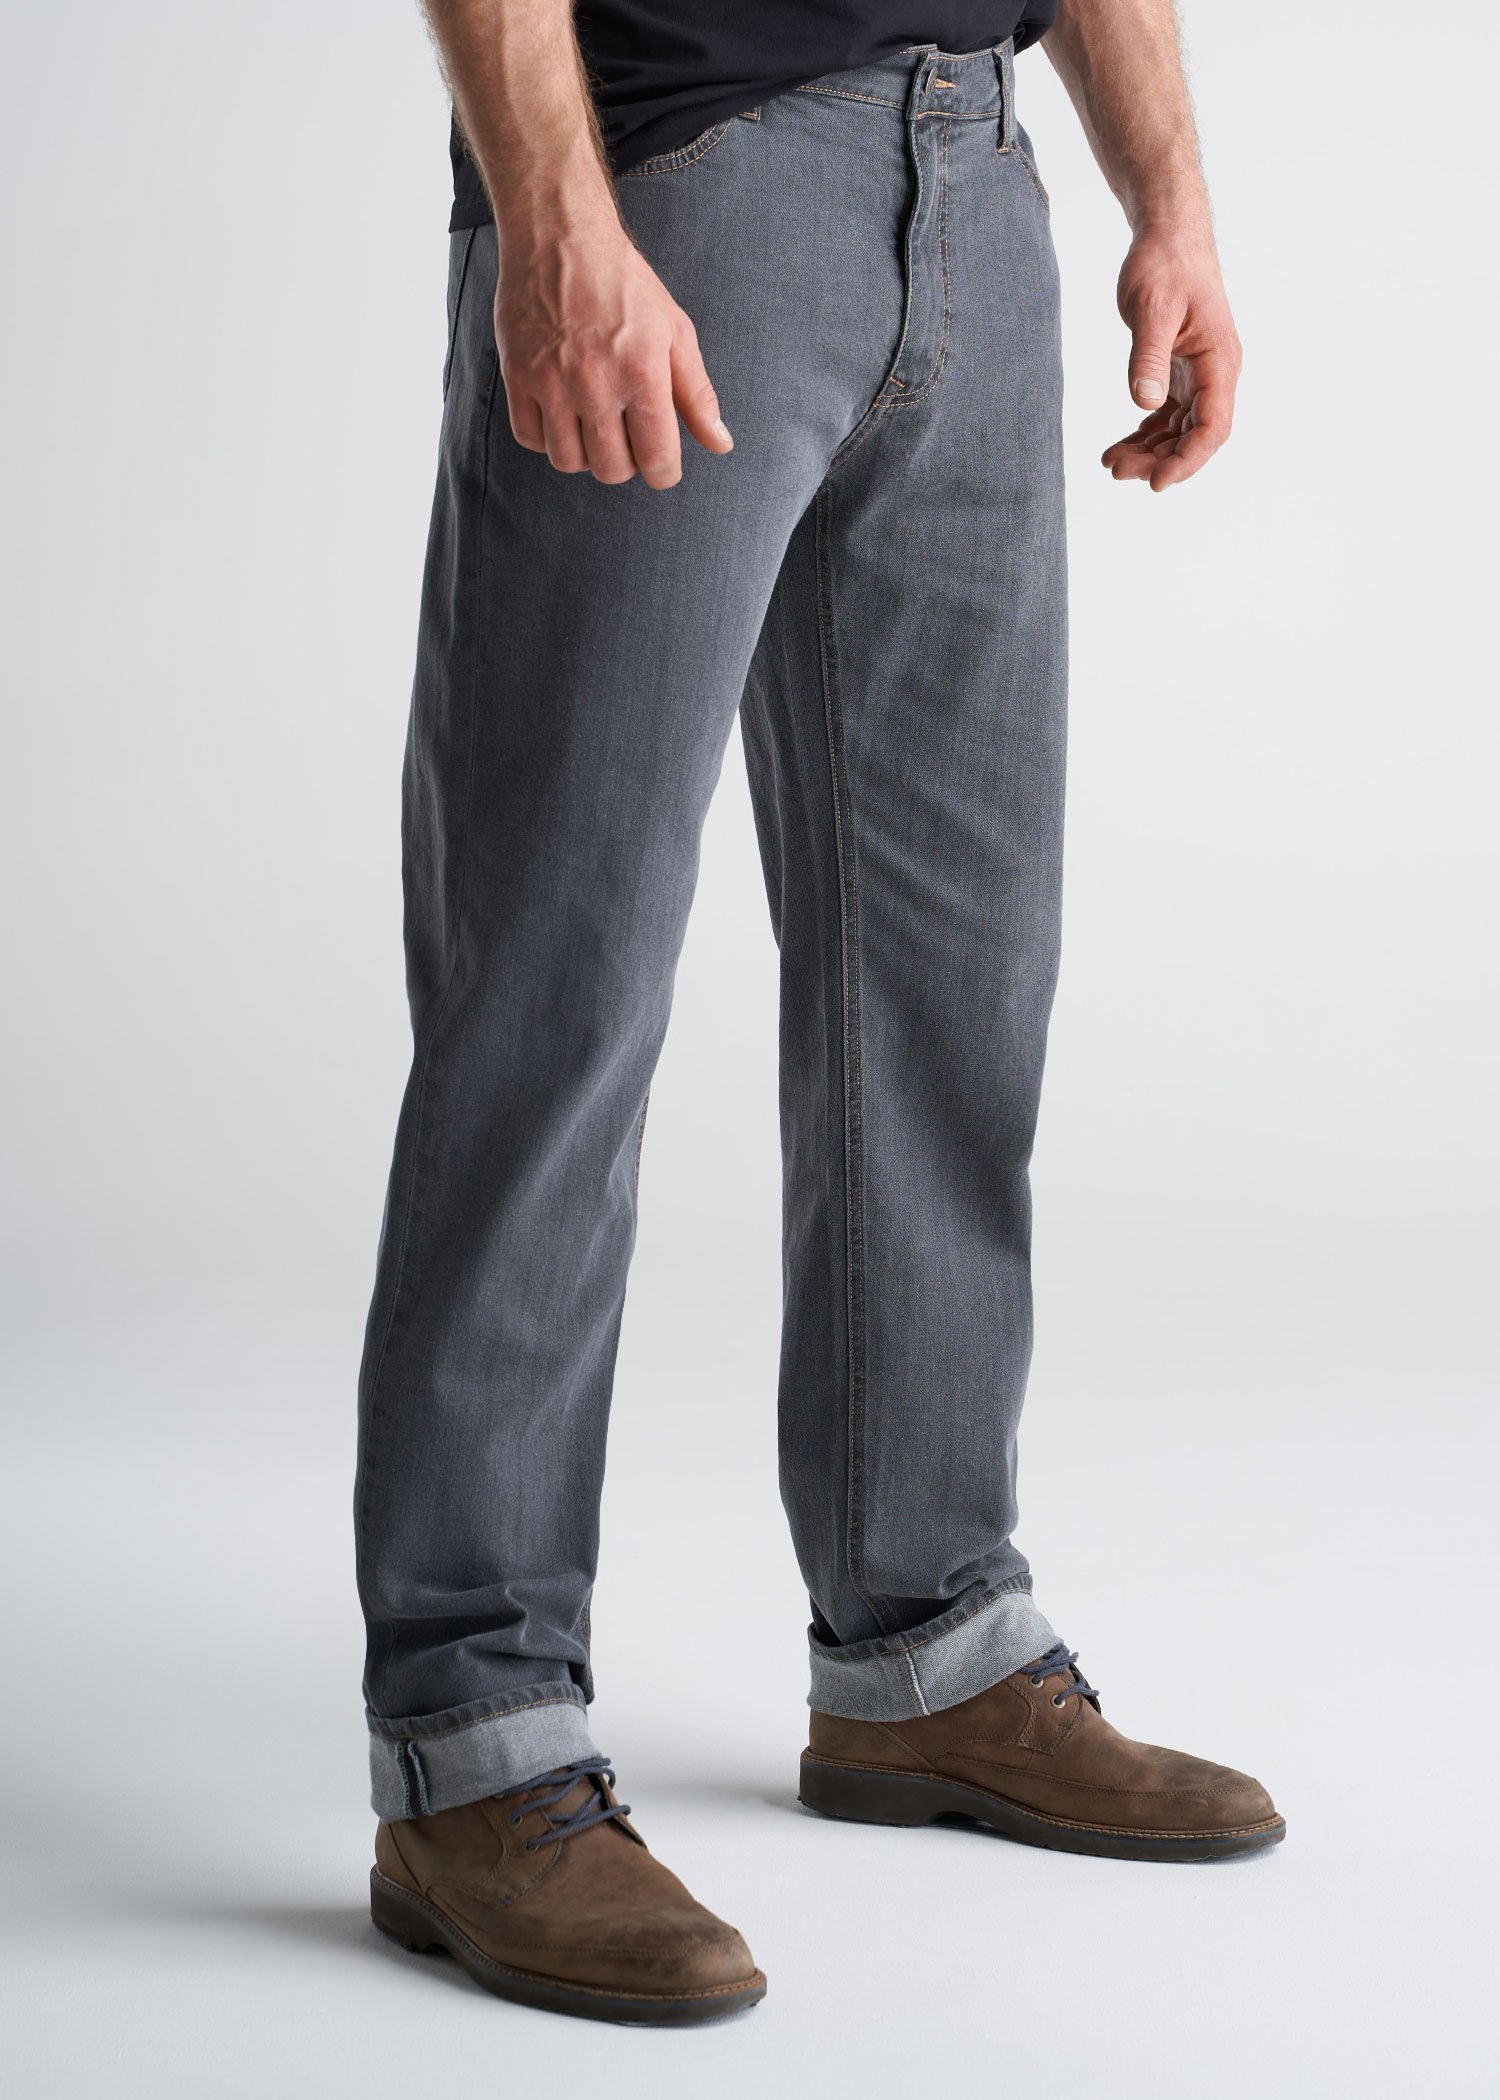 J1 STRAIGHT-LEG Tall Men's Jeans in Grey